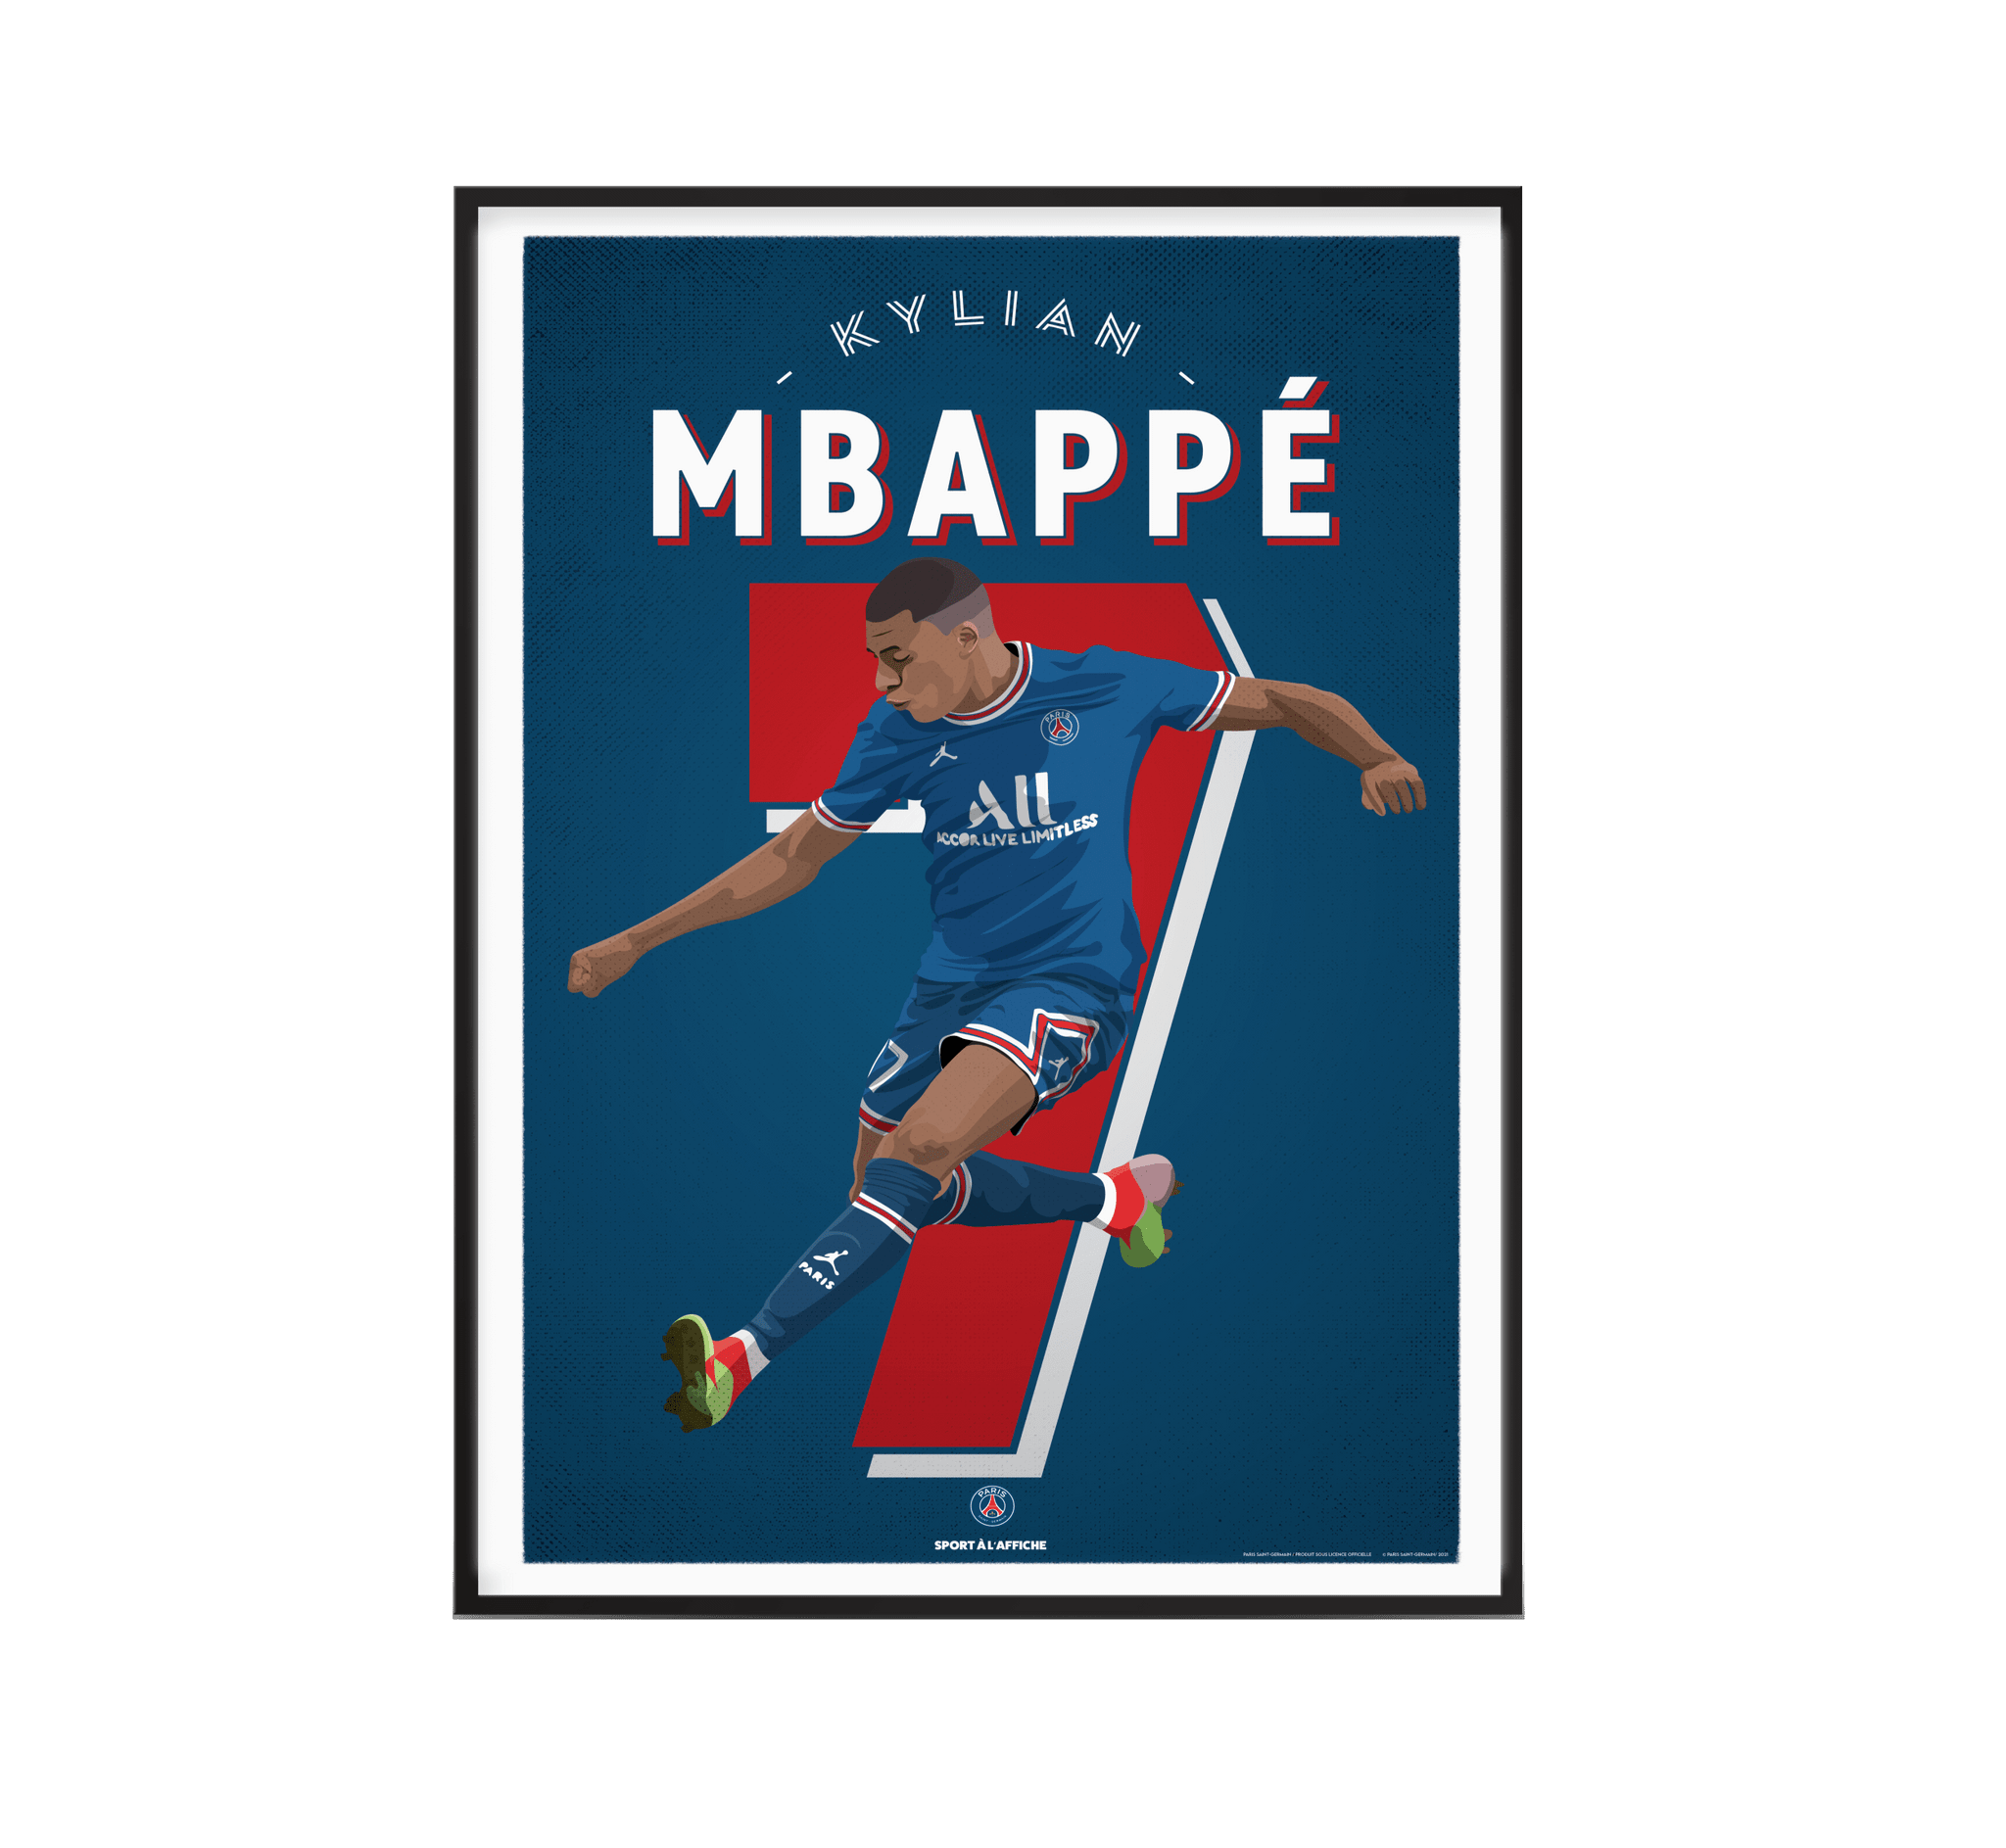 Affiche Football PSG - Illustration Kylian Mbappé 30 x 40 cm PSG